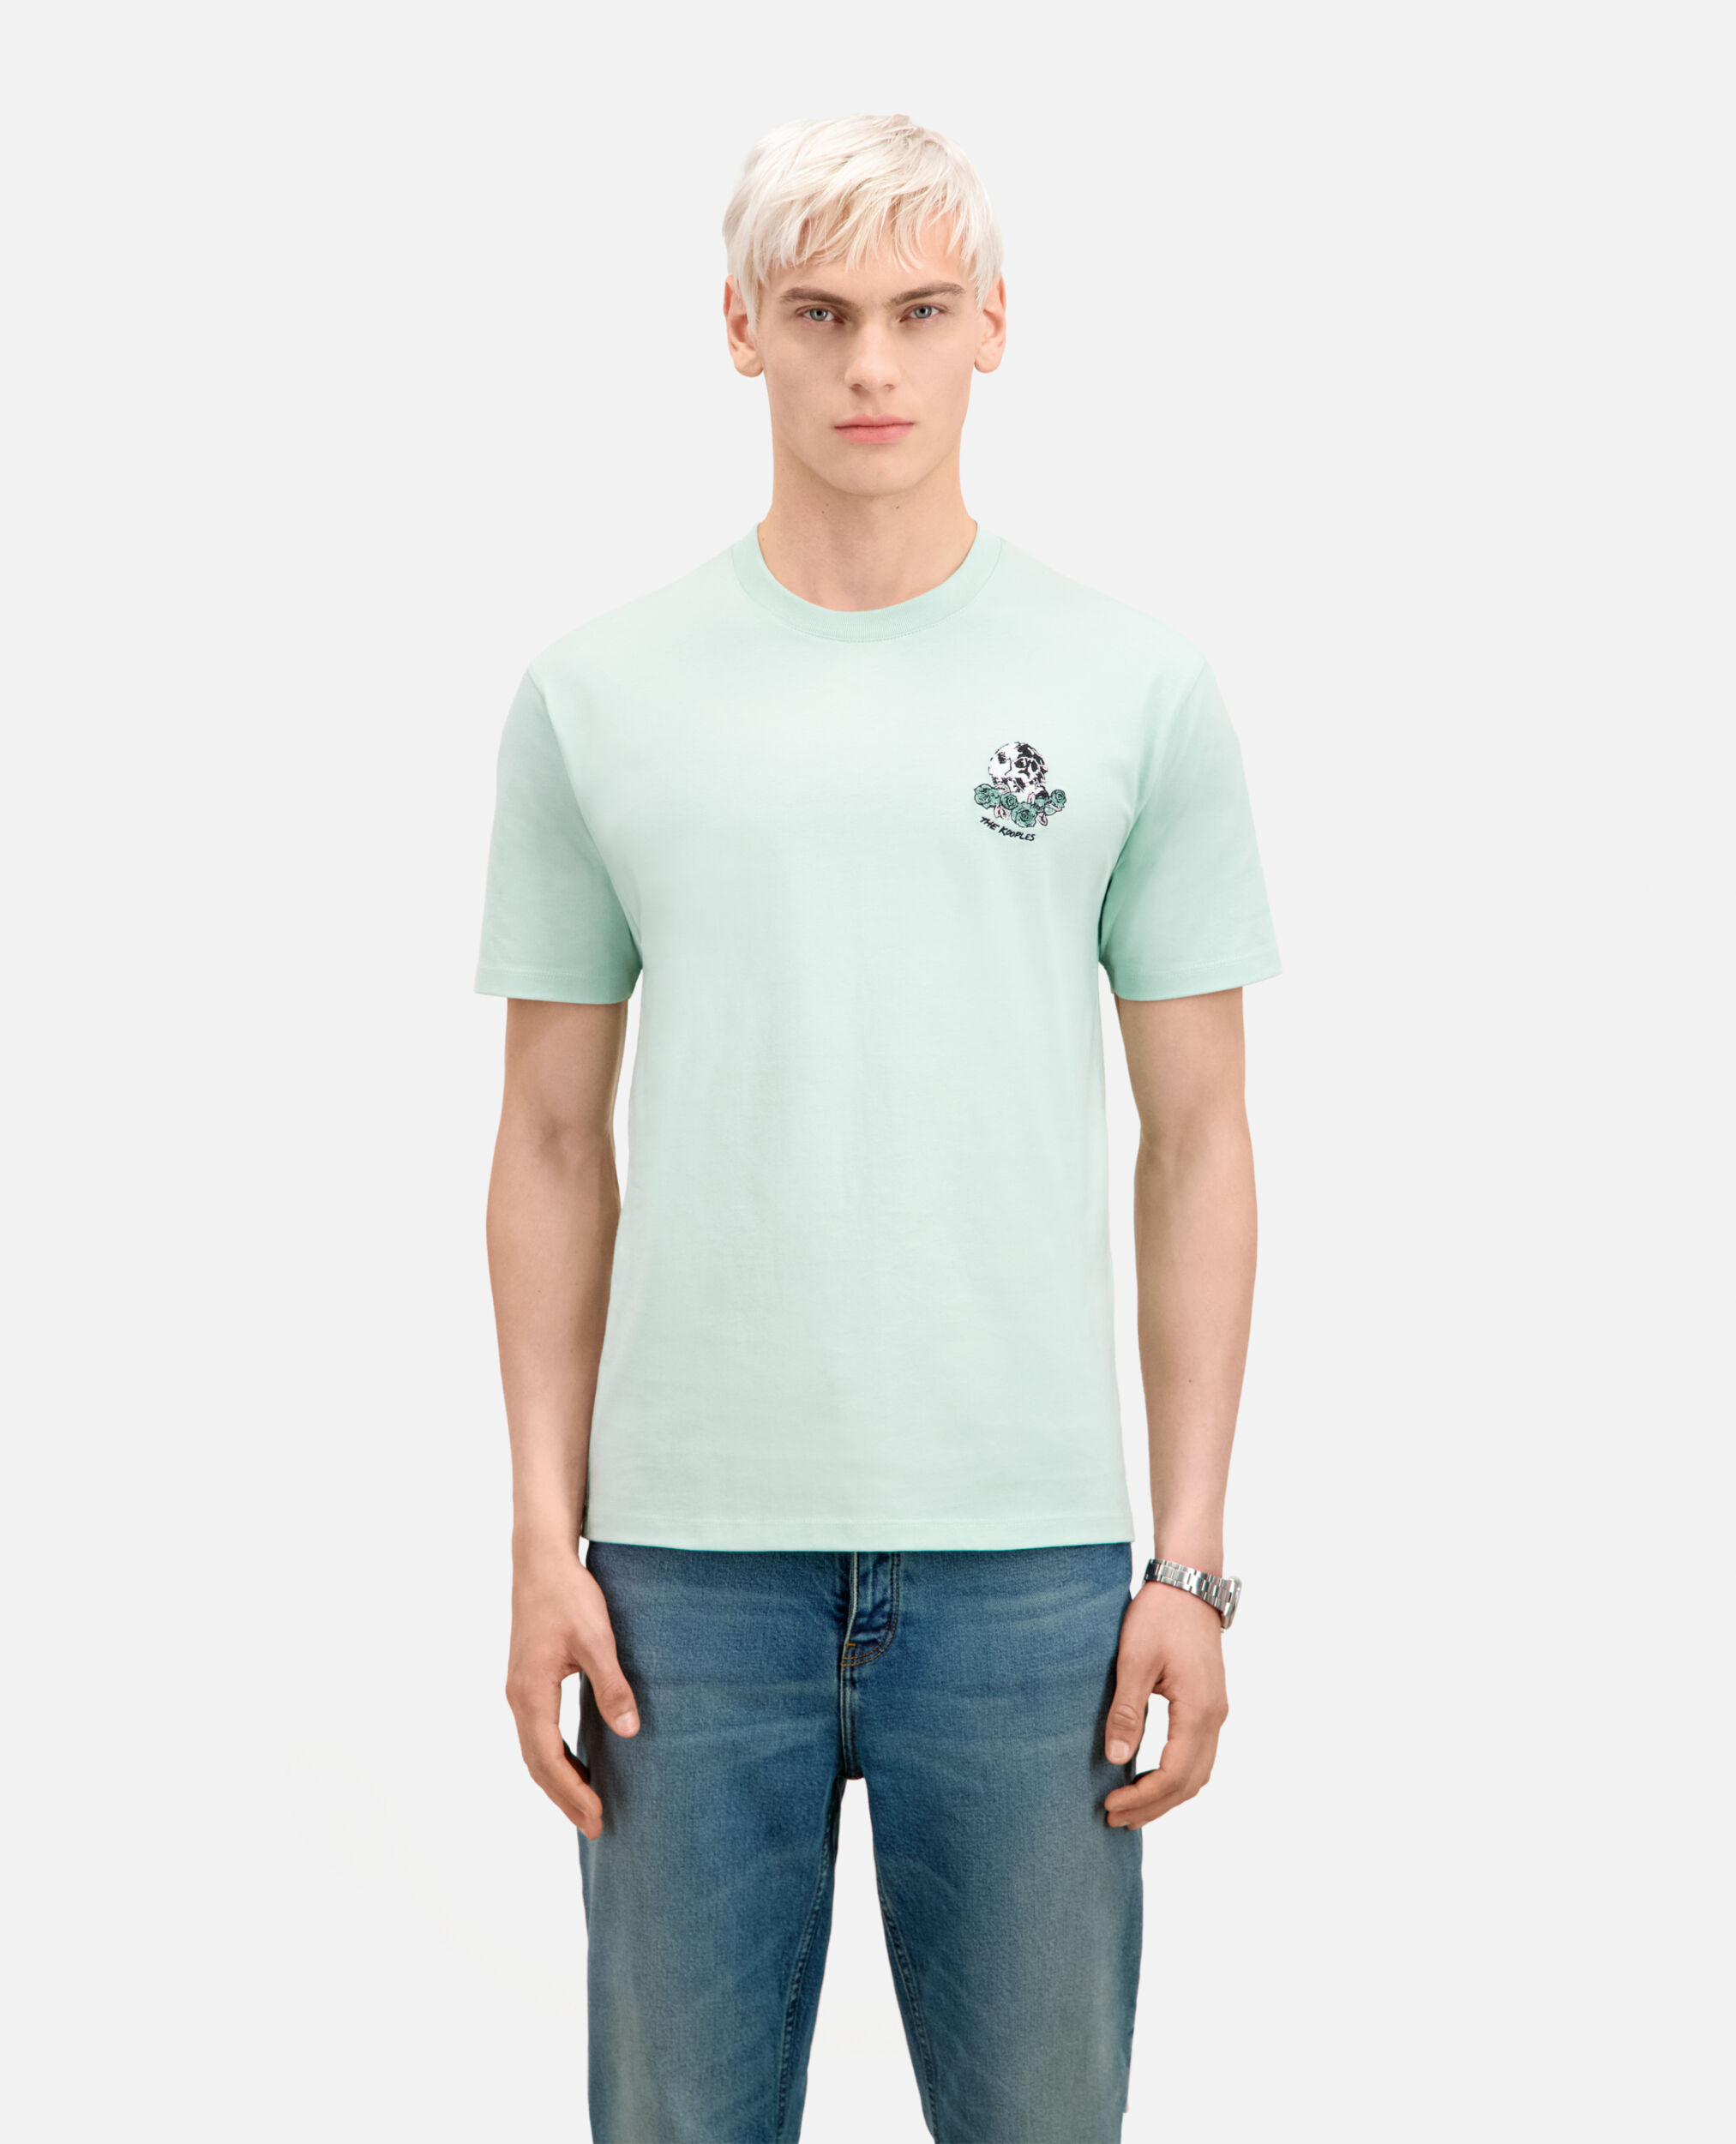 Grünes T-Shirt mit Vintage-Skull-Stickerei, OCEAN, hi-res image number null